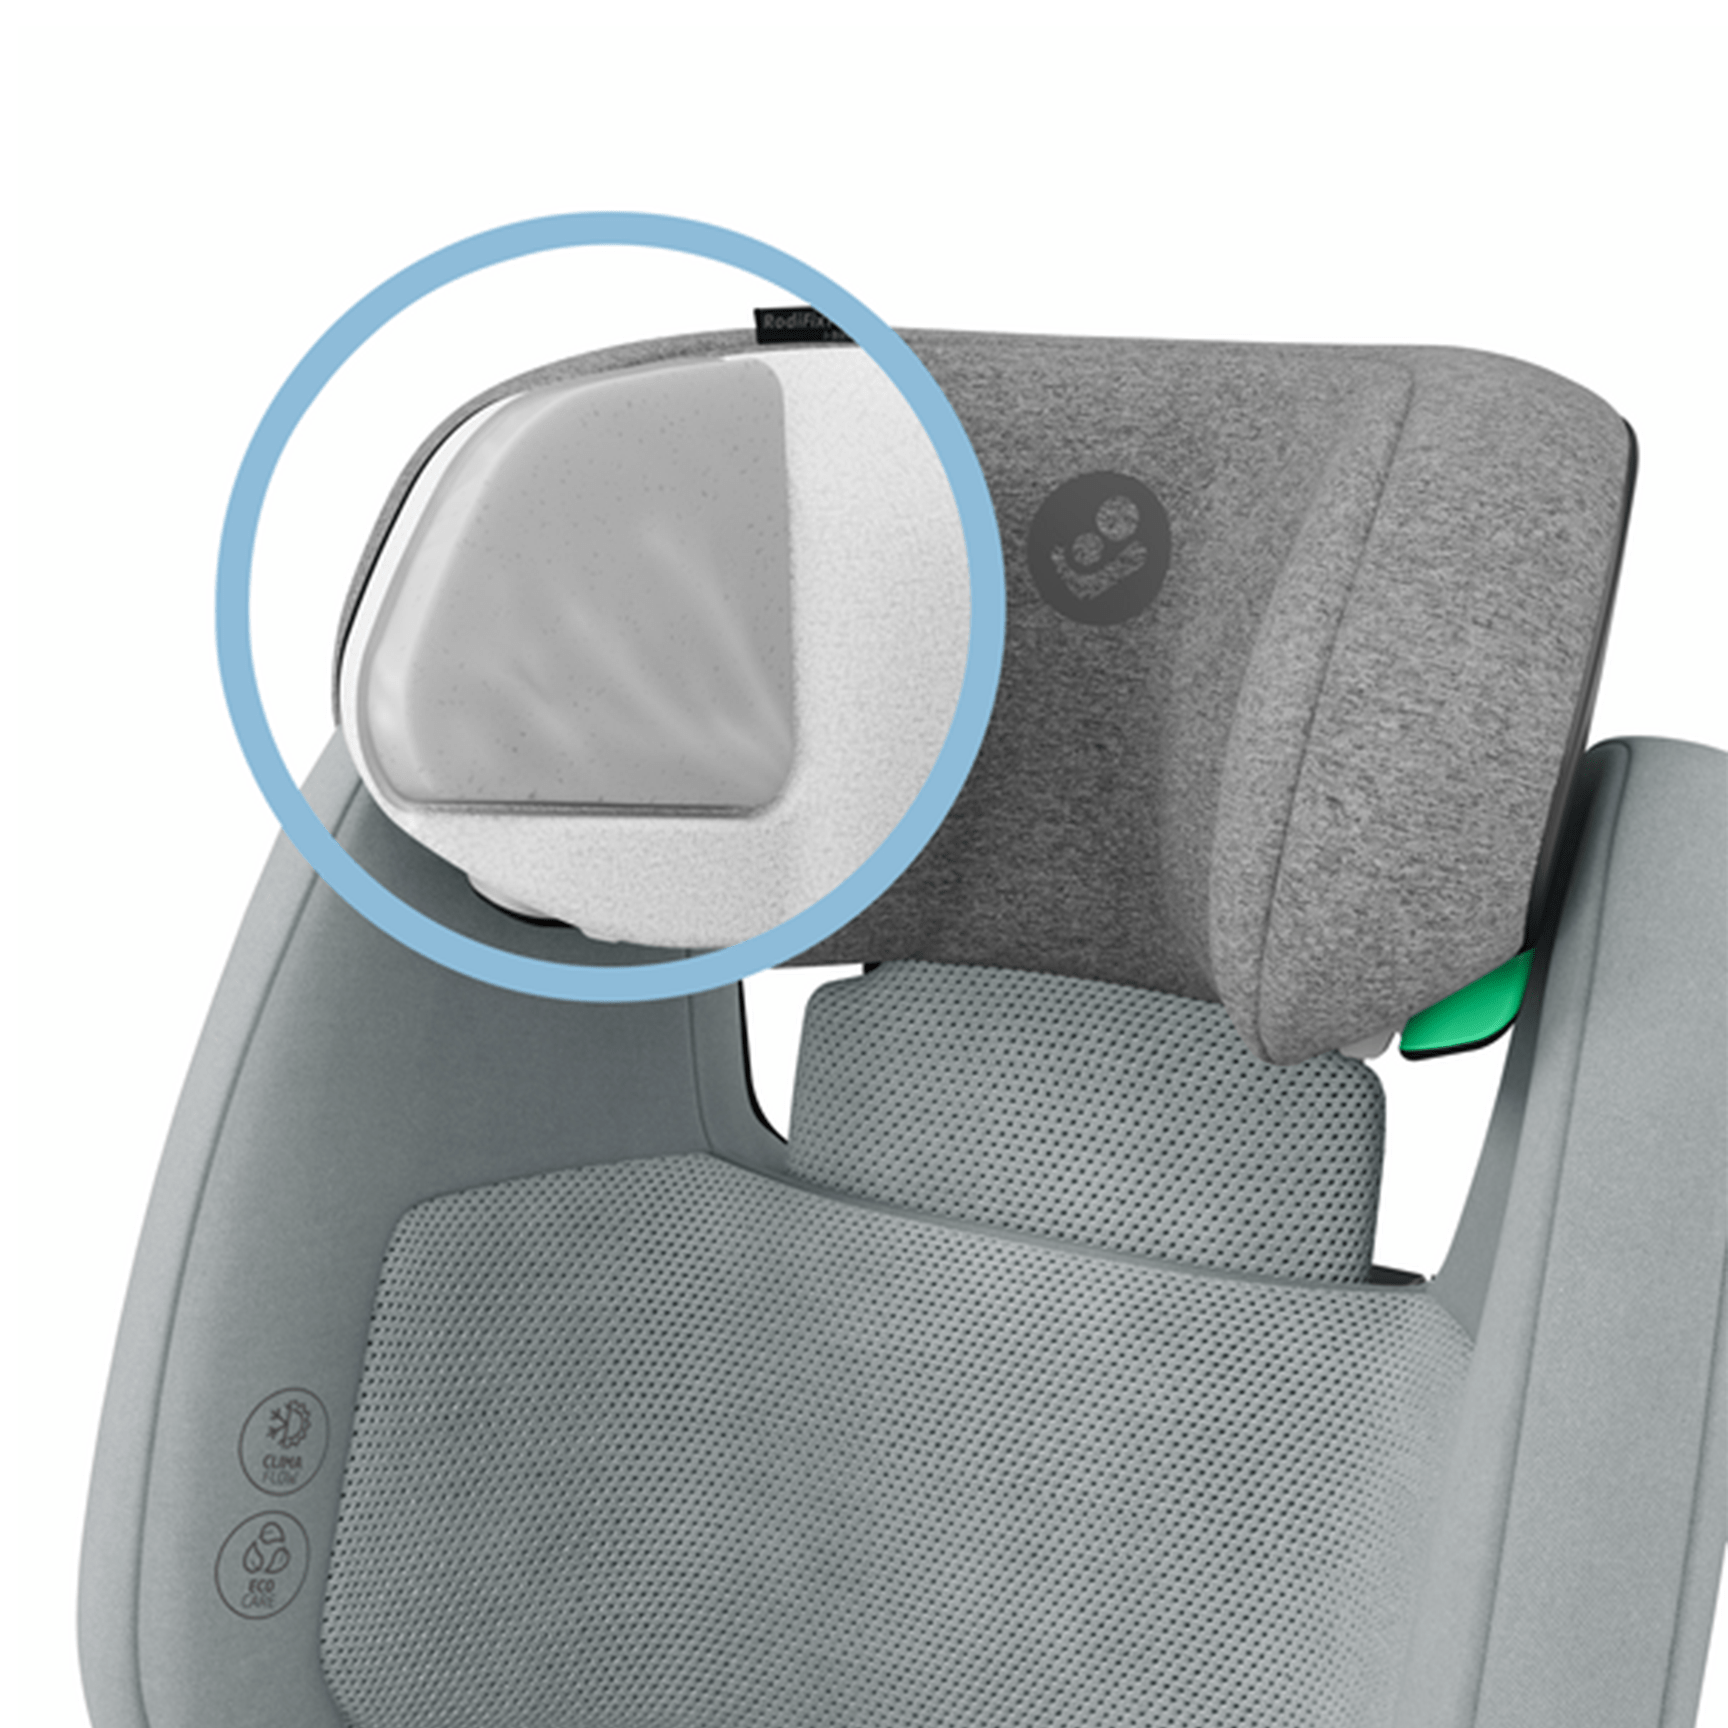 Maxi-Cosi baby car seats Maxi-Cosi Rodifix Pro i-size Car Seat - Authenic Grey 8800510110